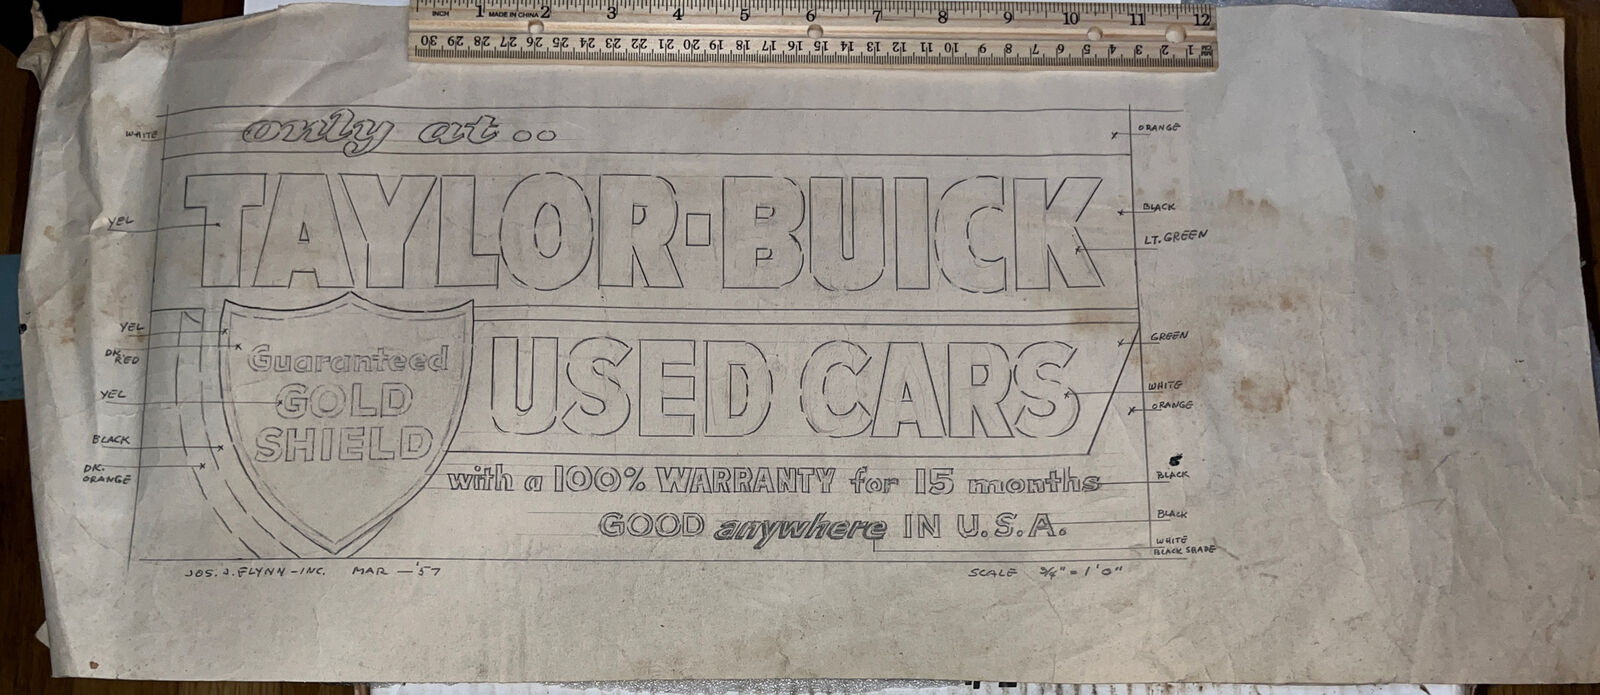 Vintage Advertising Sample: 1957 Taylor Buick Lawrence Massachusetts Warranty